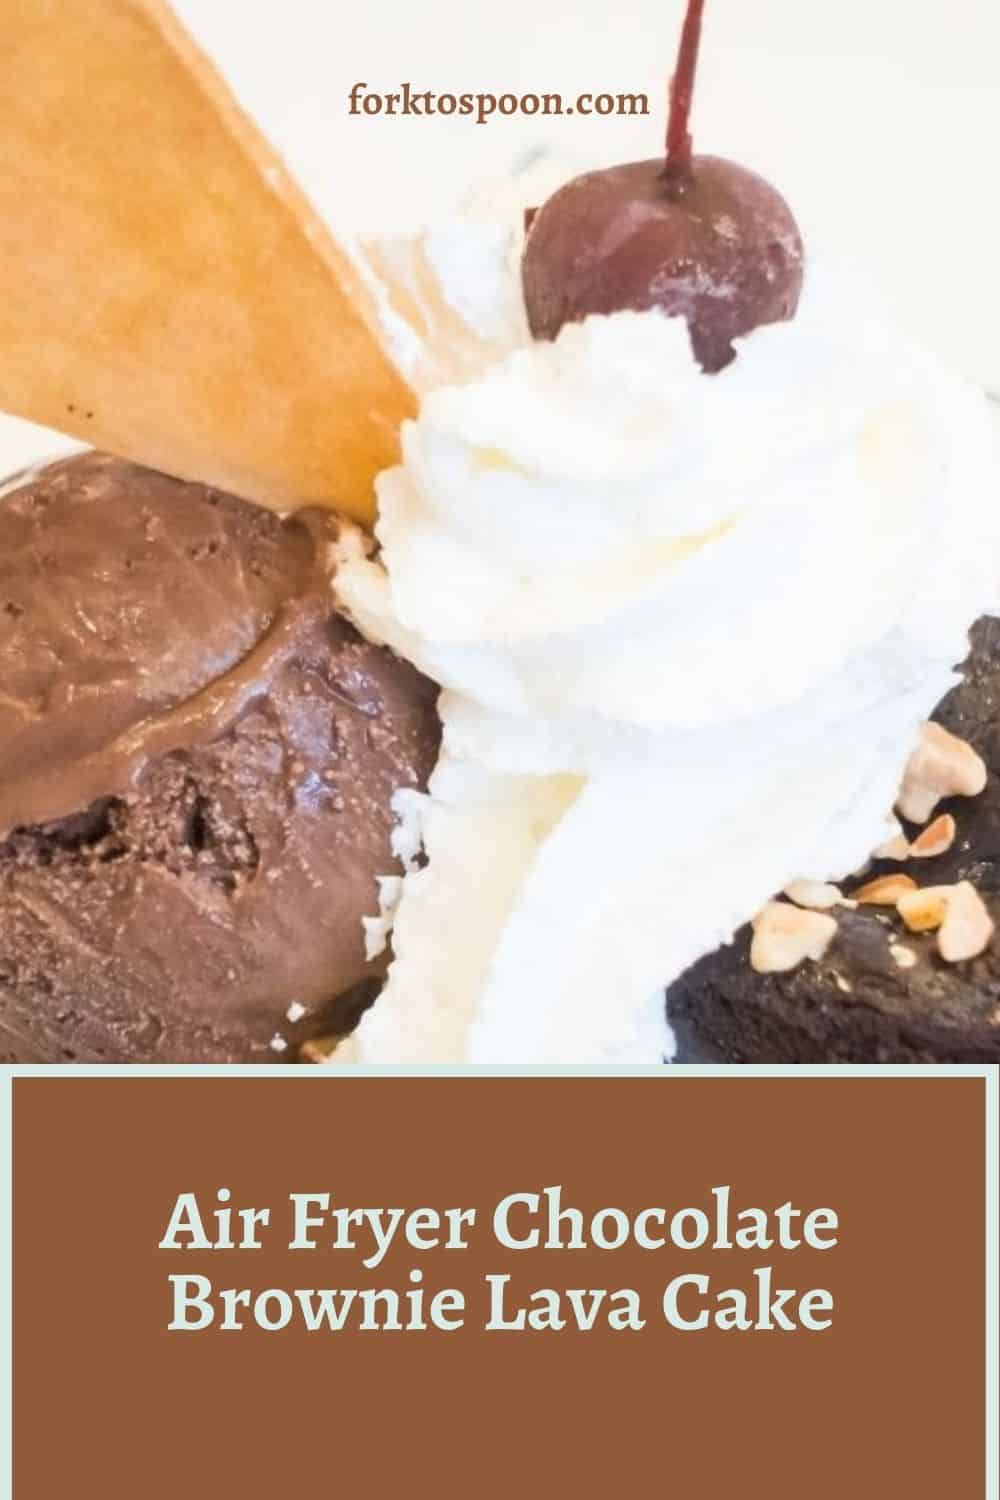 Air Fryer Chocolate Brownie Lava Cake